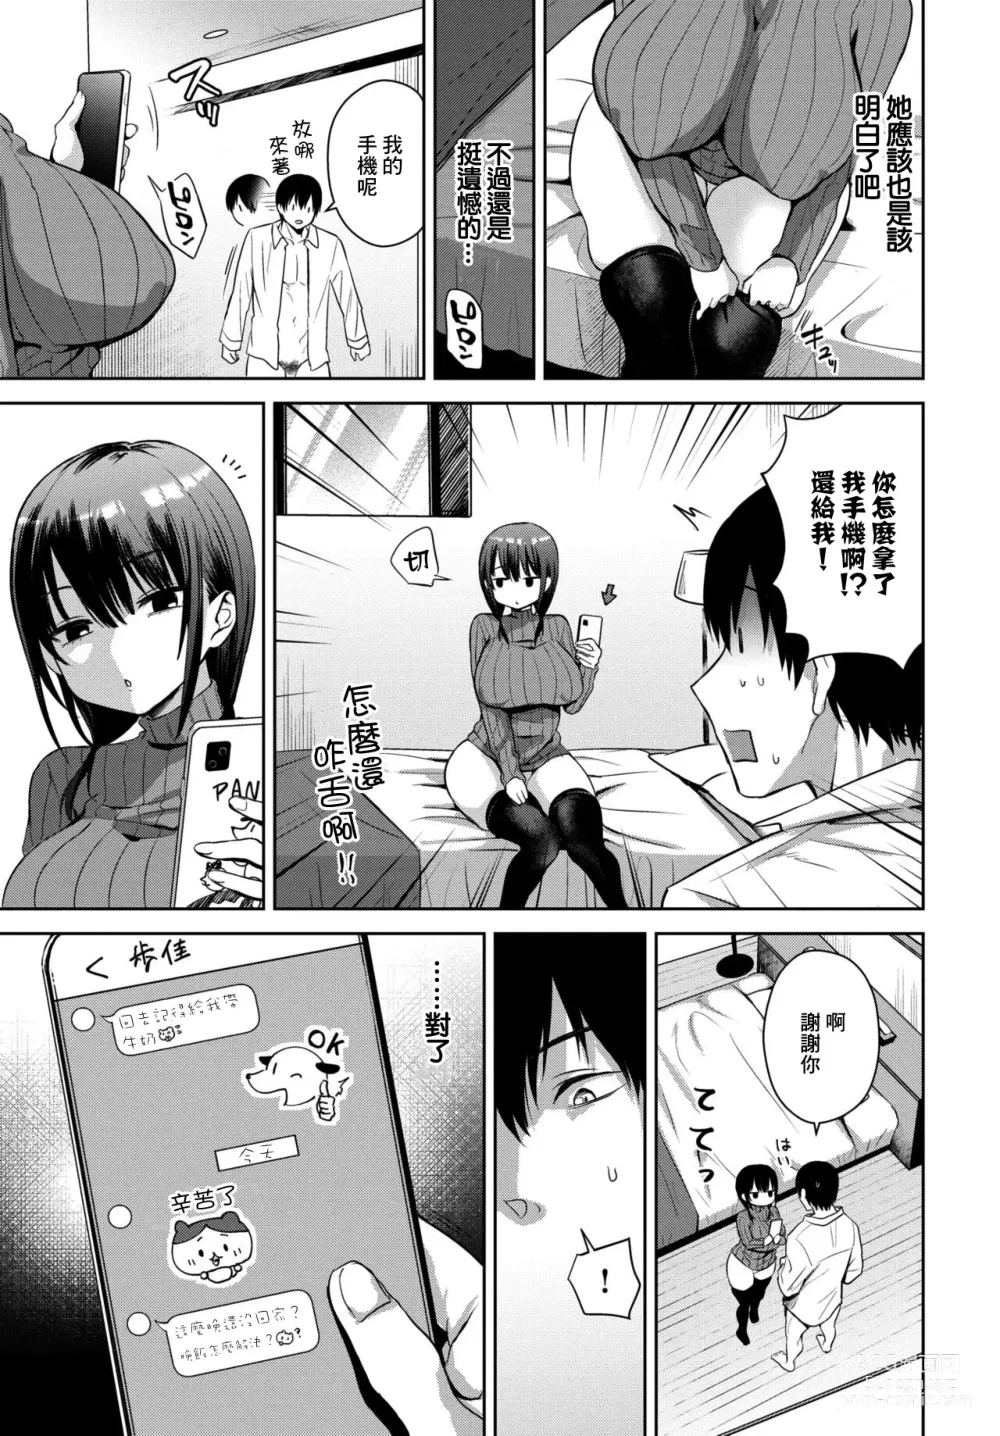 Page 9 of manga Furaretori